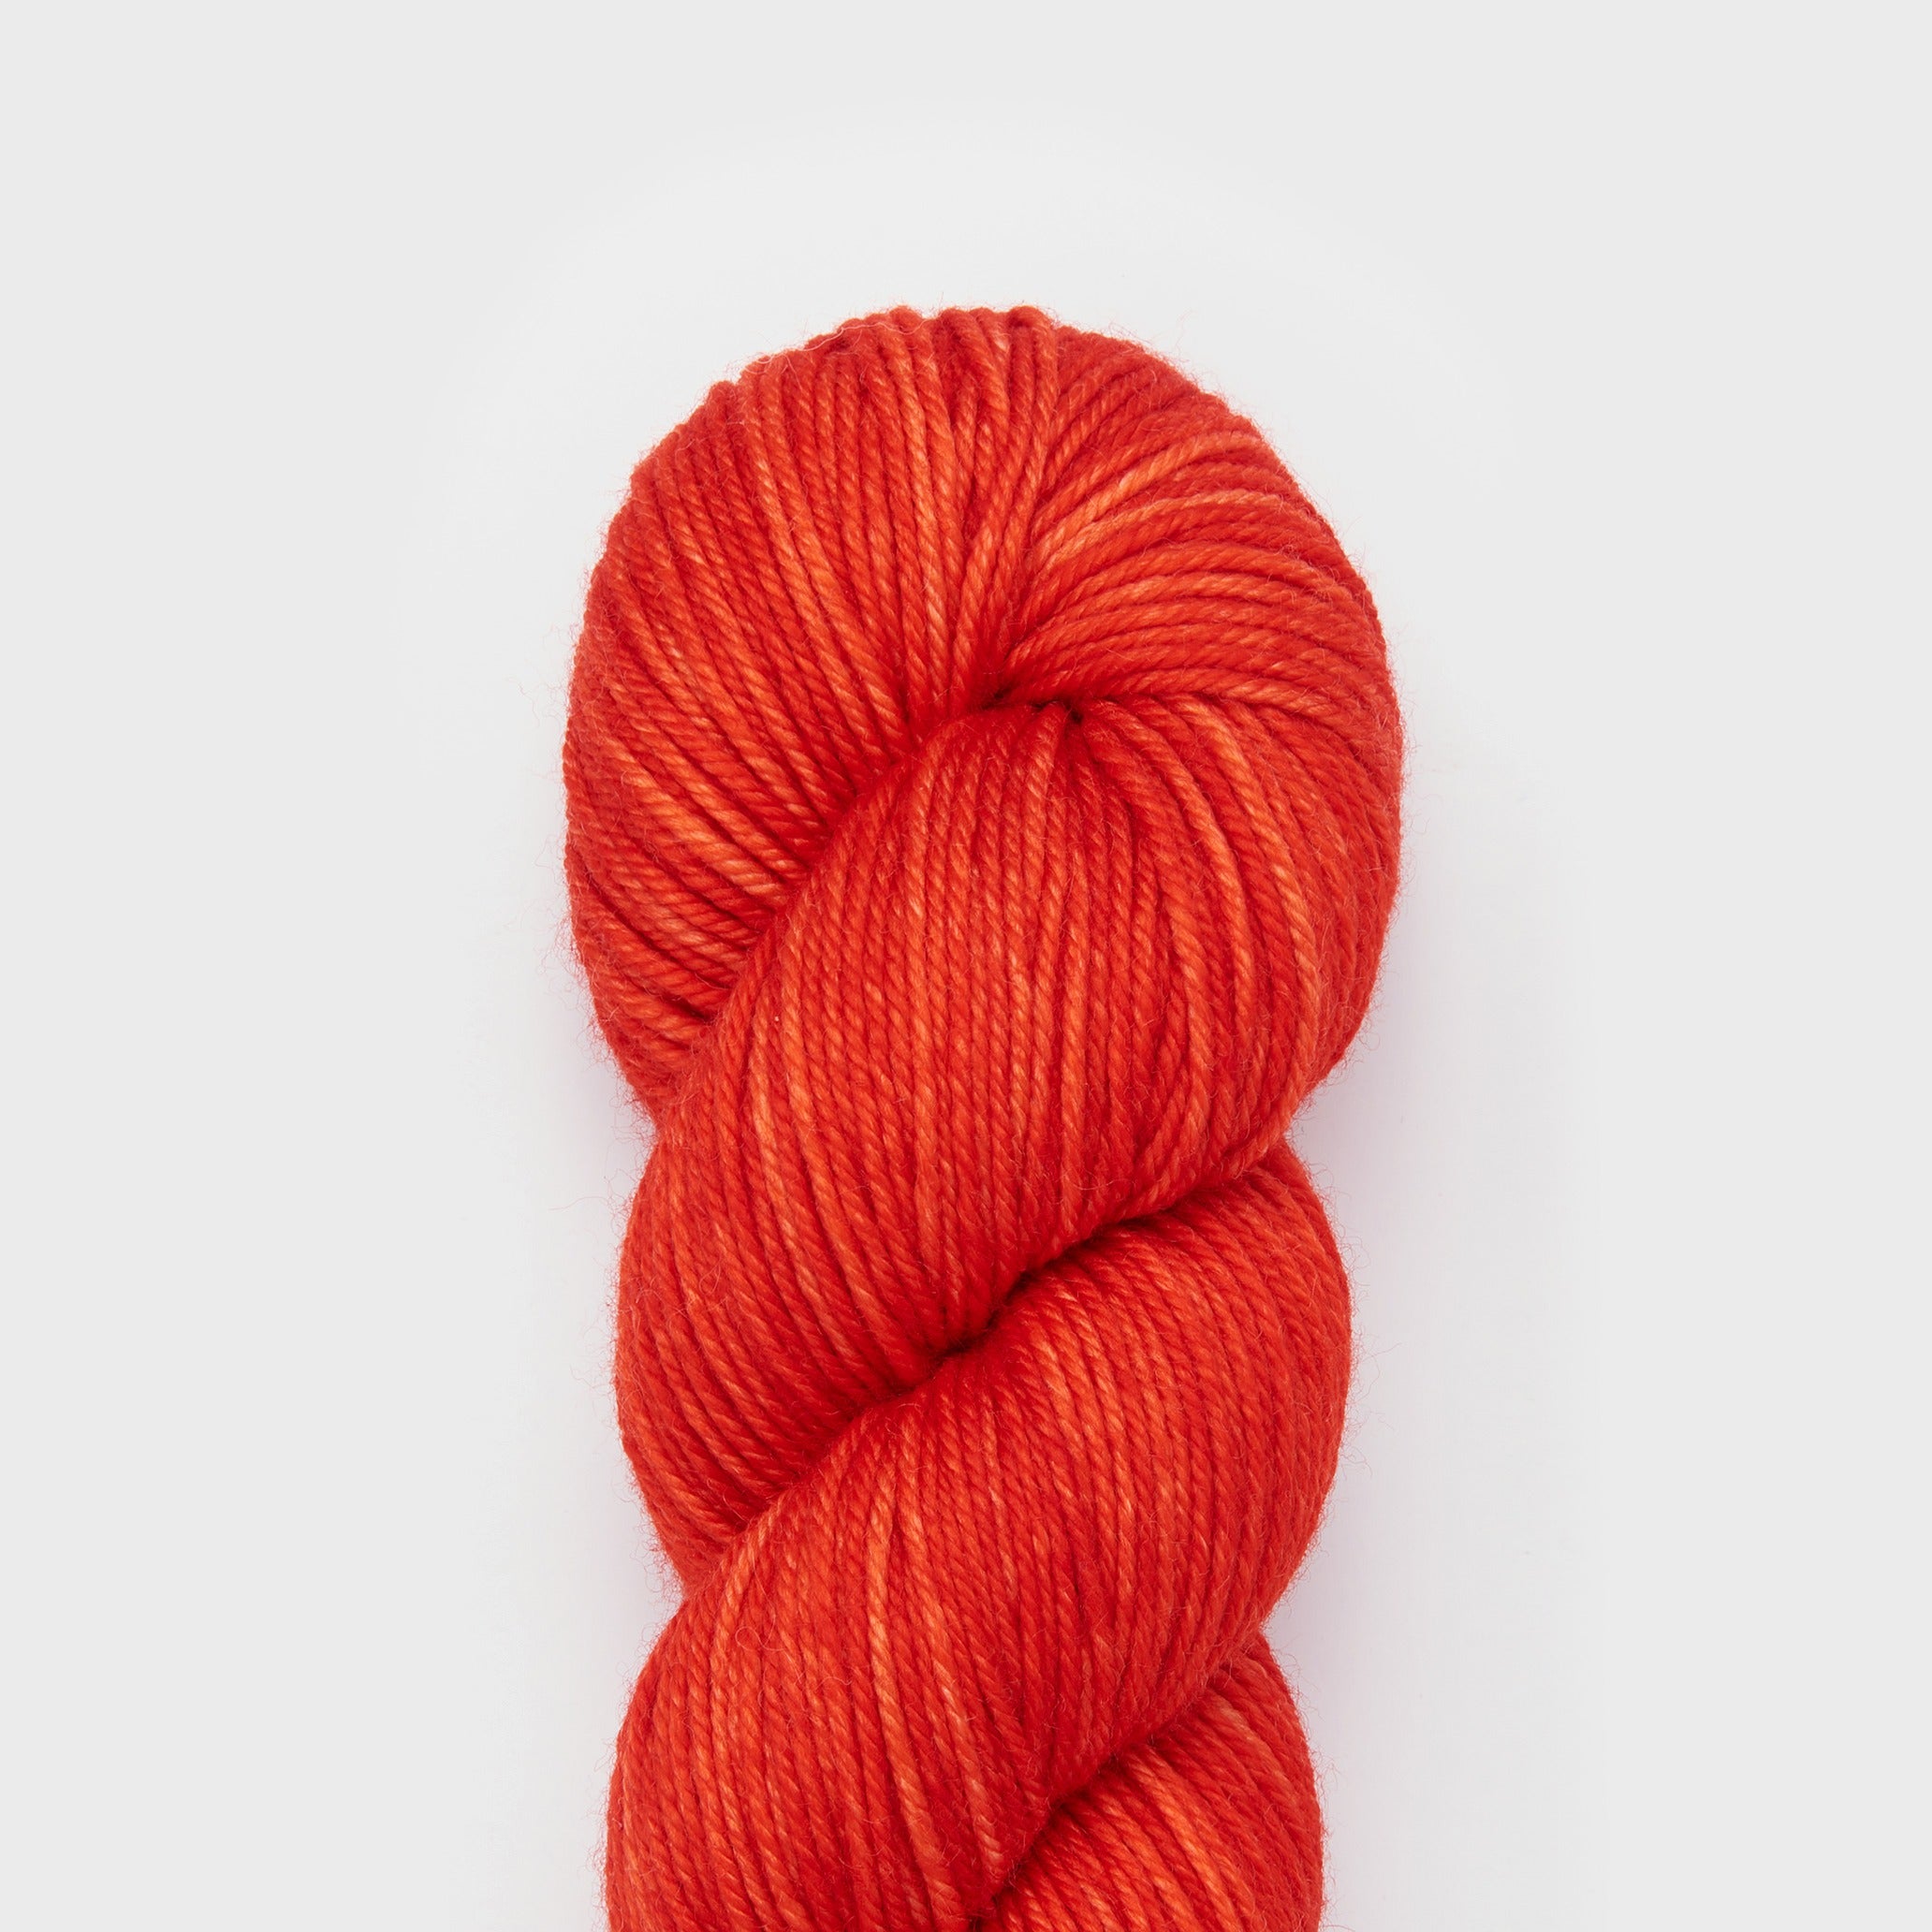 Red Orange Yarn 